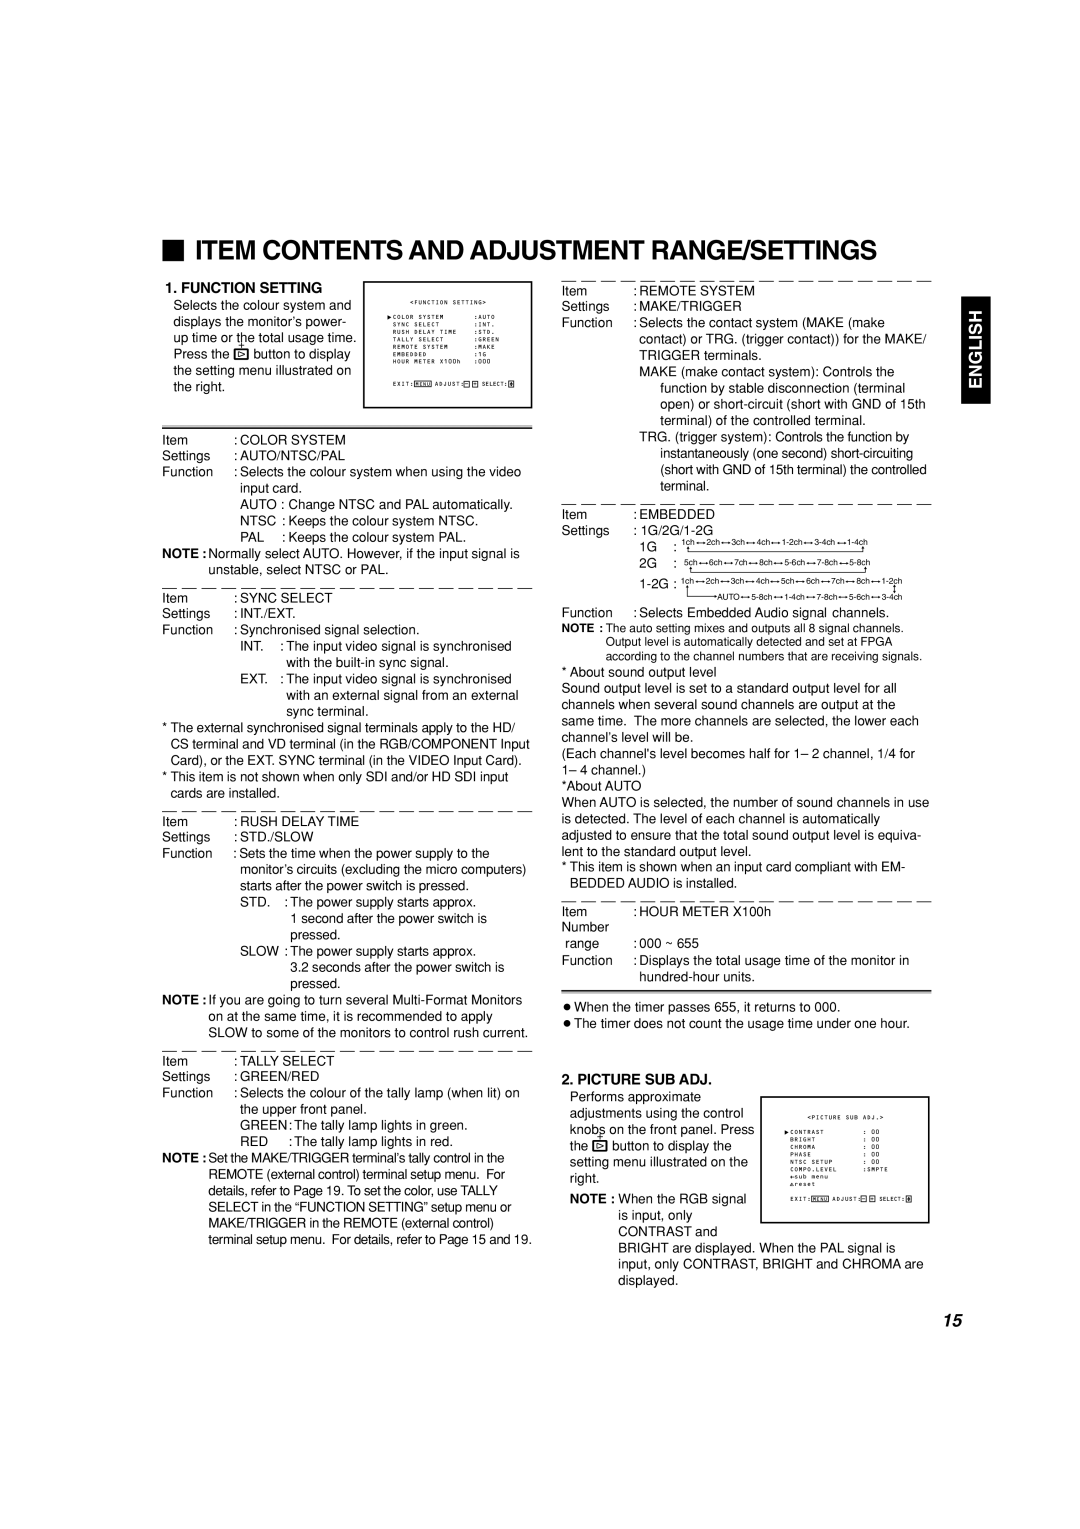 Panasonic BT-H1700AE manual  Item Contents And Adjustment Range/Settings, English, Function Setting, Picture Sub Adj 